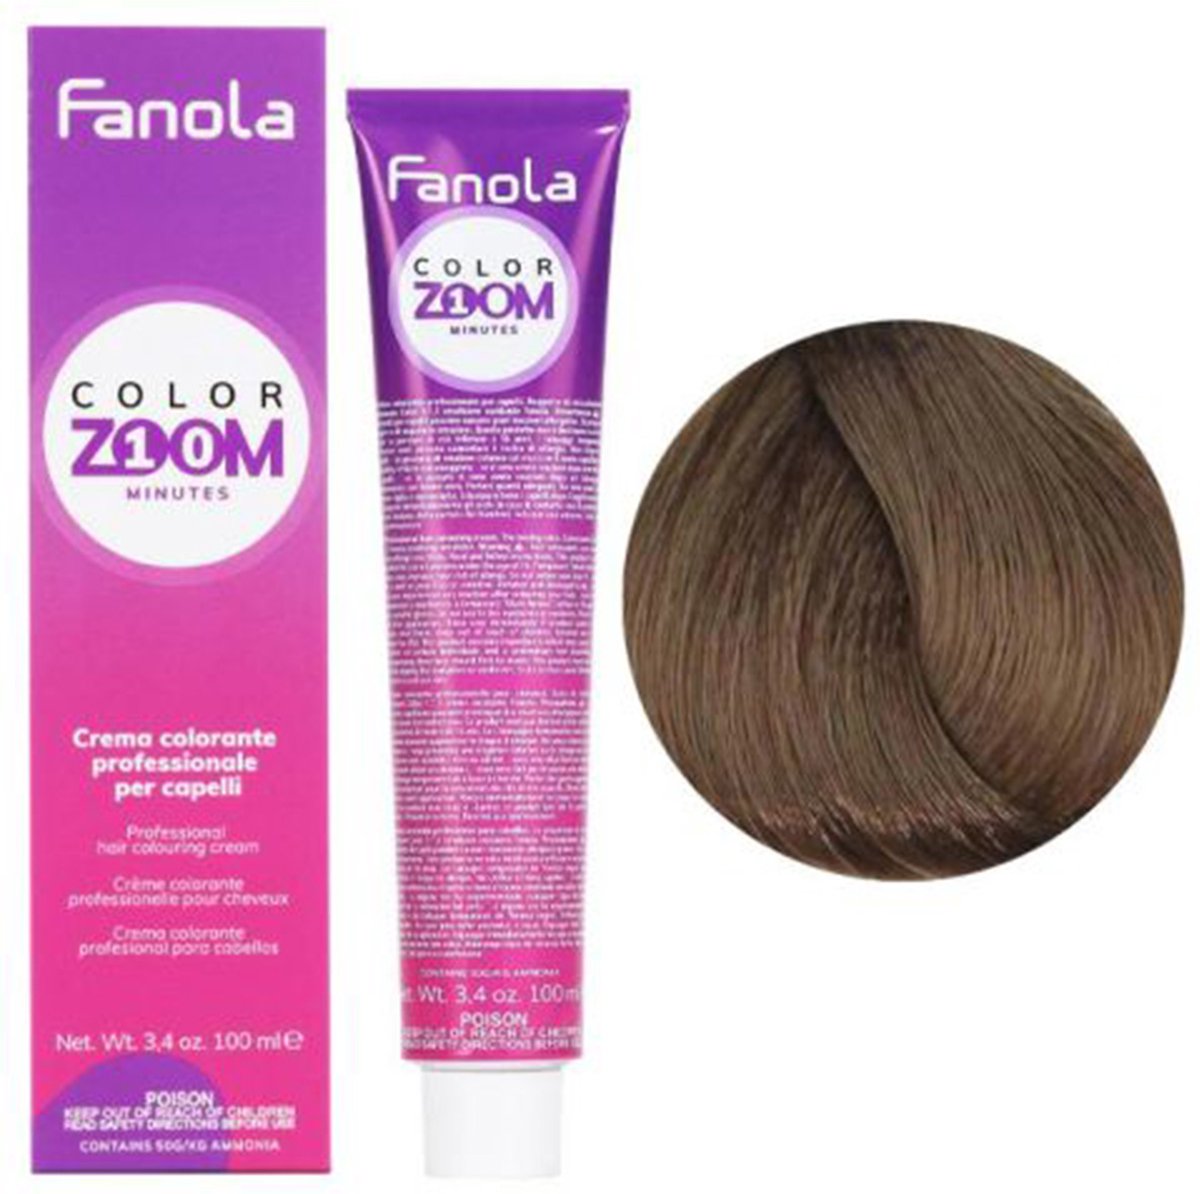 Fanola - Color Zoom - 100 ml - 6.0